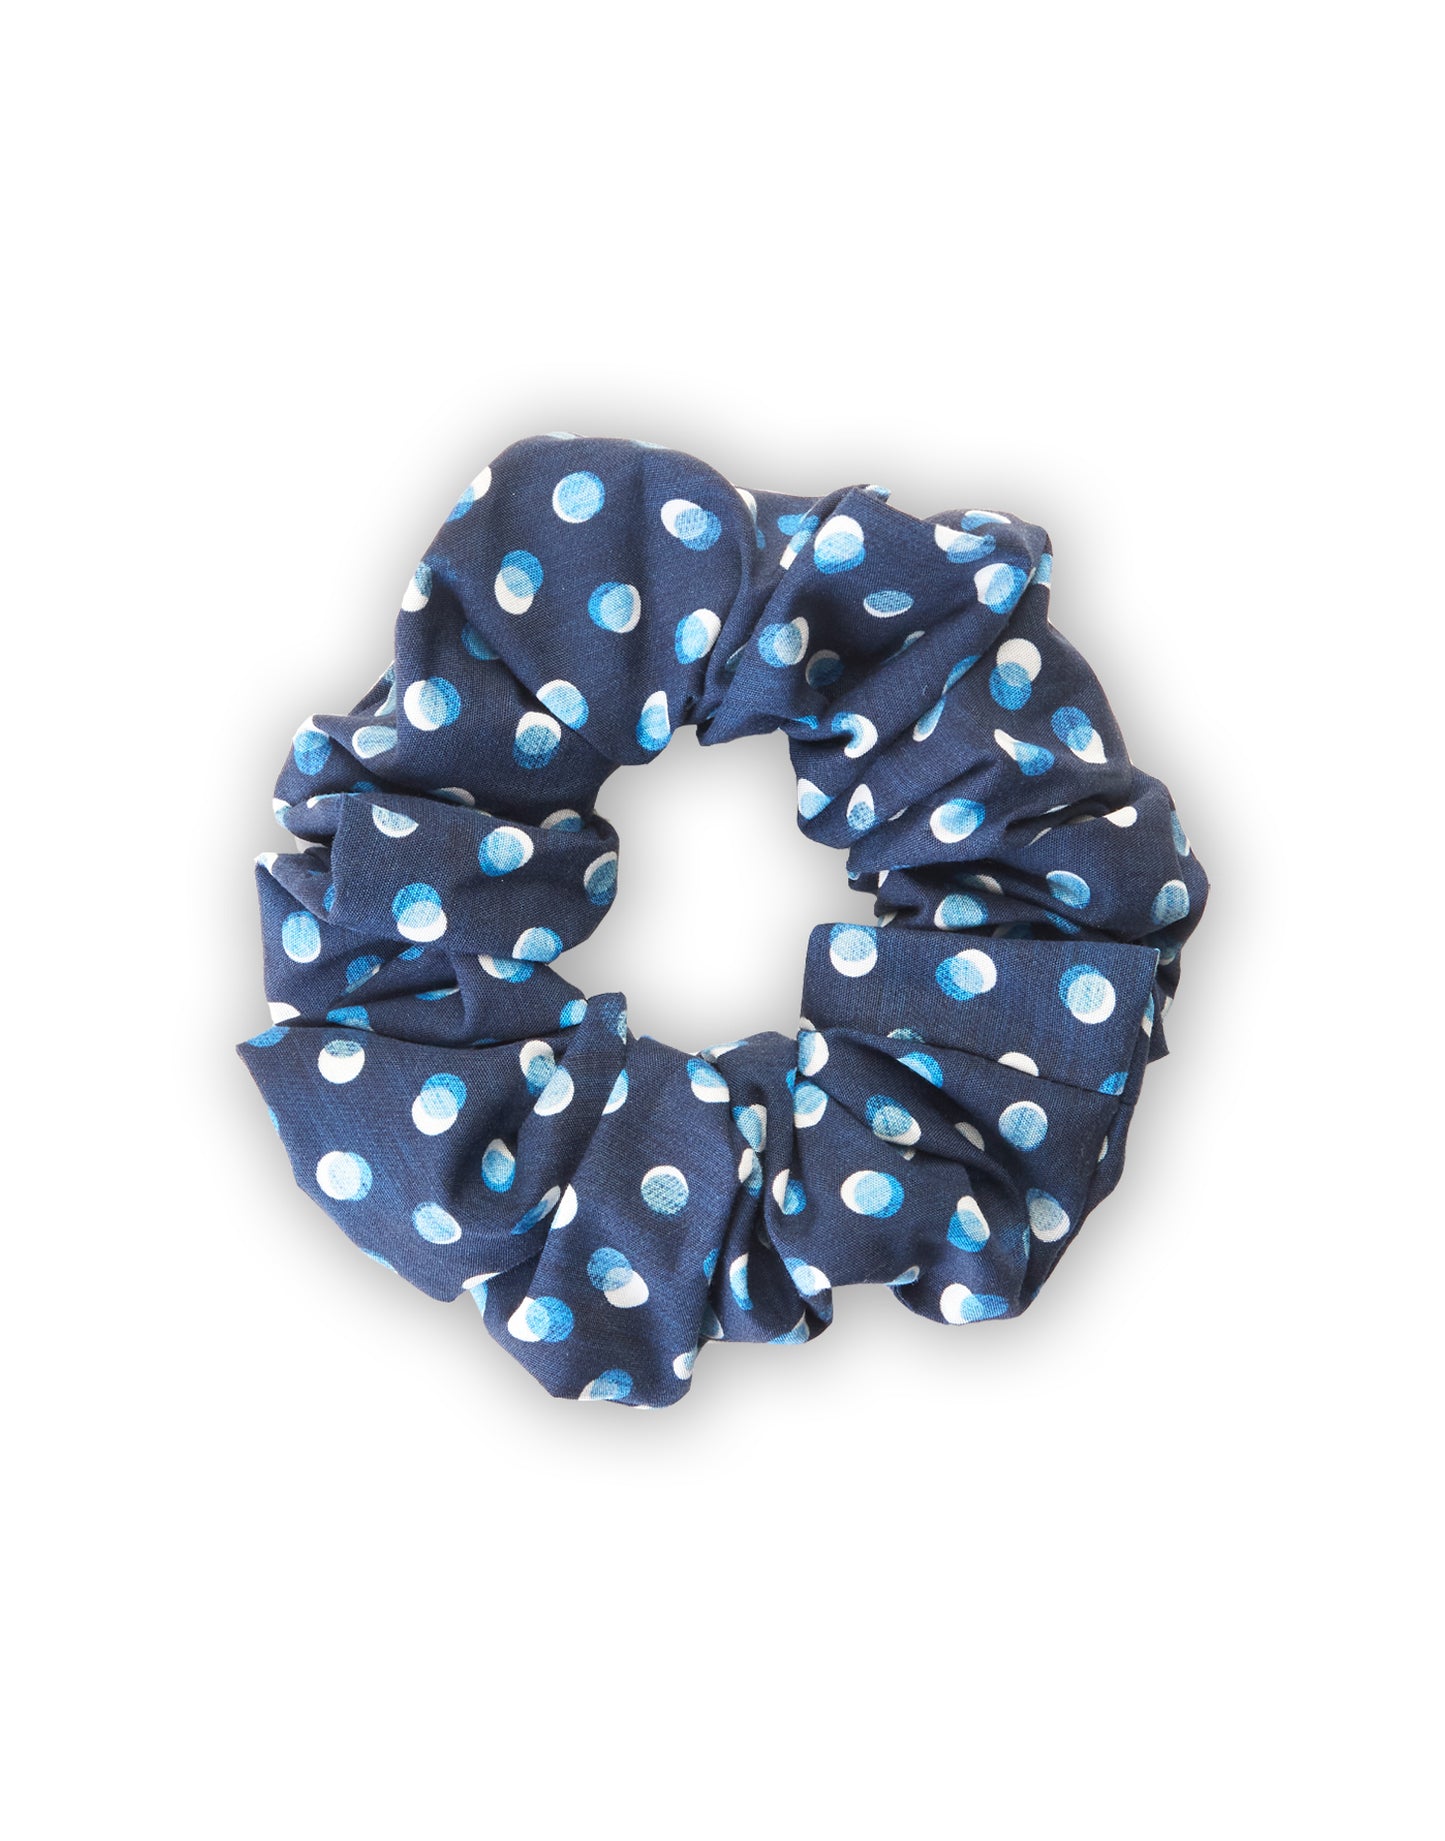 Tessie Clothing | Dotty Liberty Print Hair Scrunchie | Hair Tie | Blue and white polka dot scrunchie